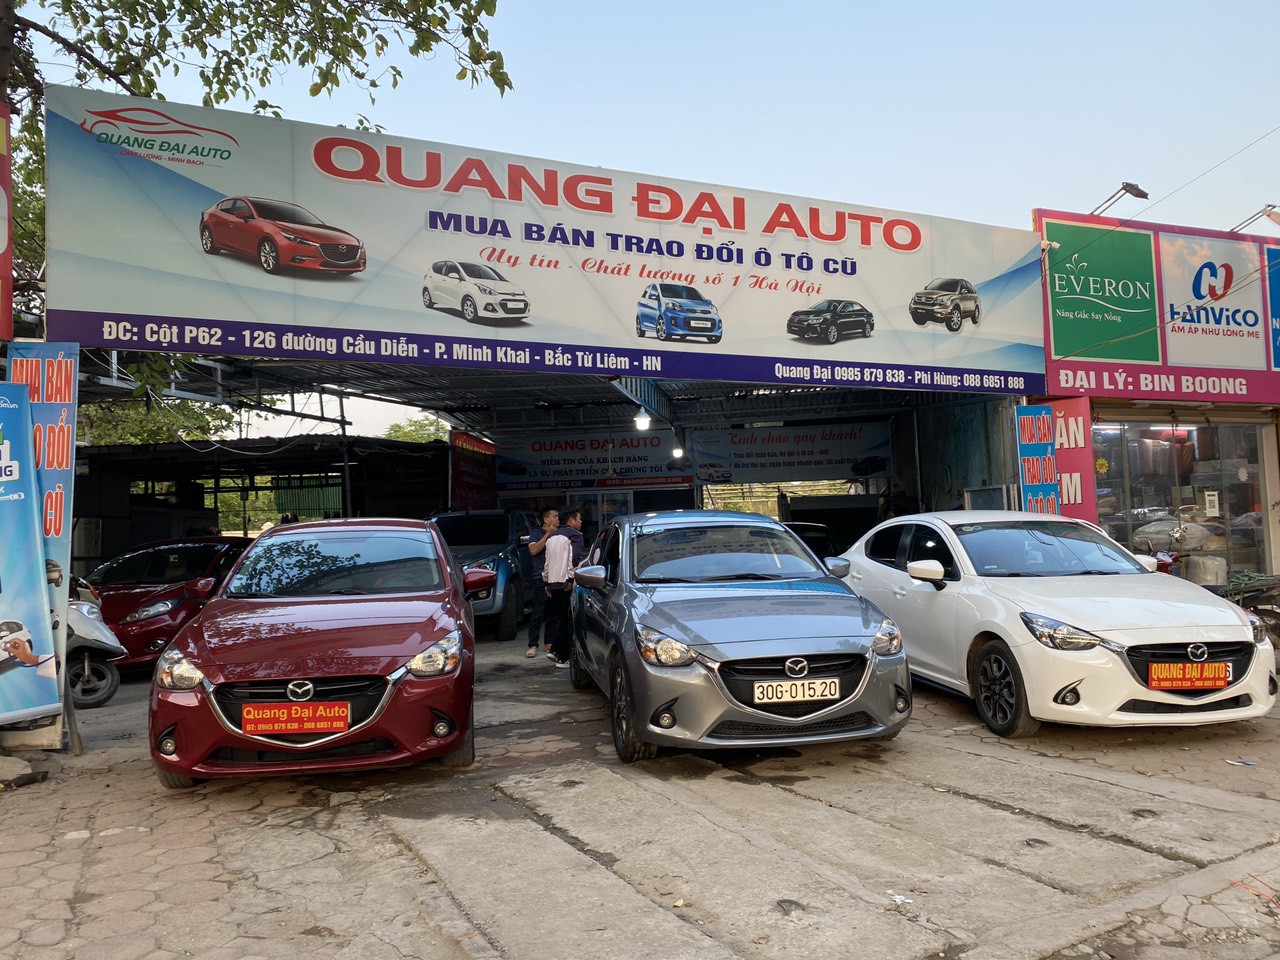 Auto Quang Đại